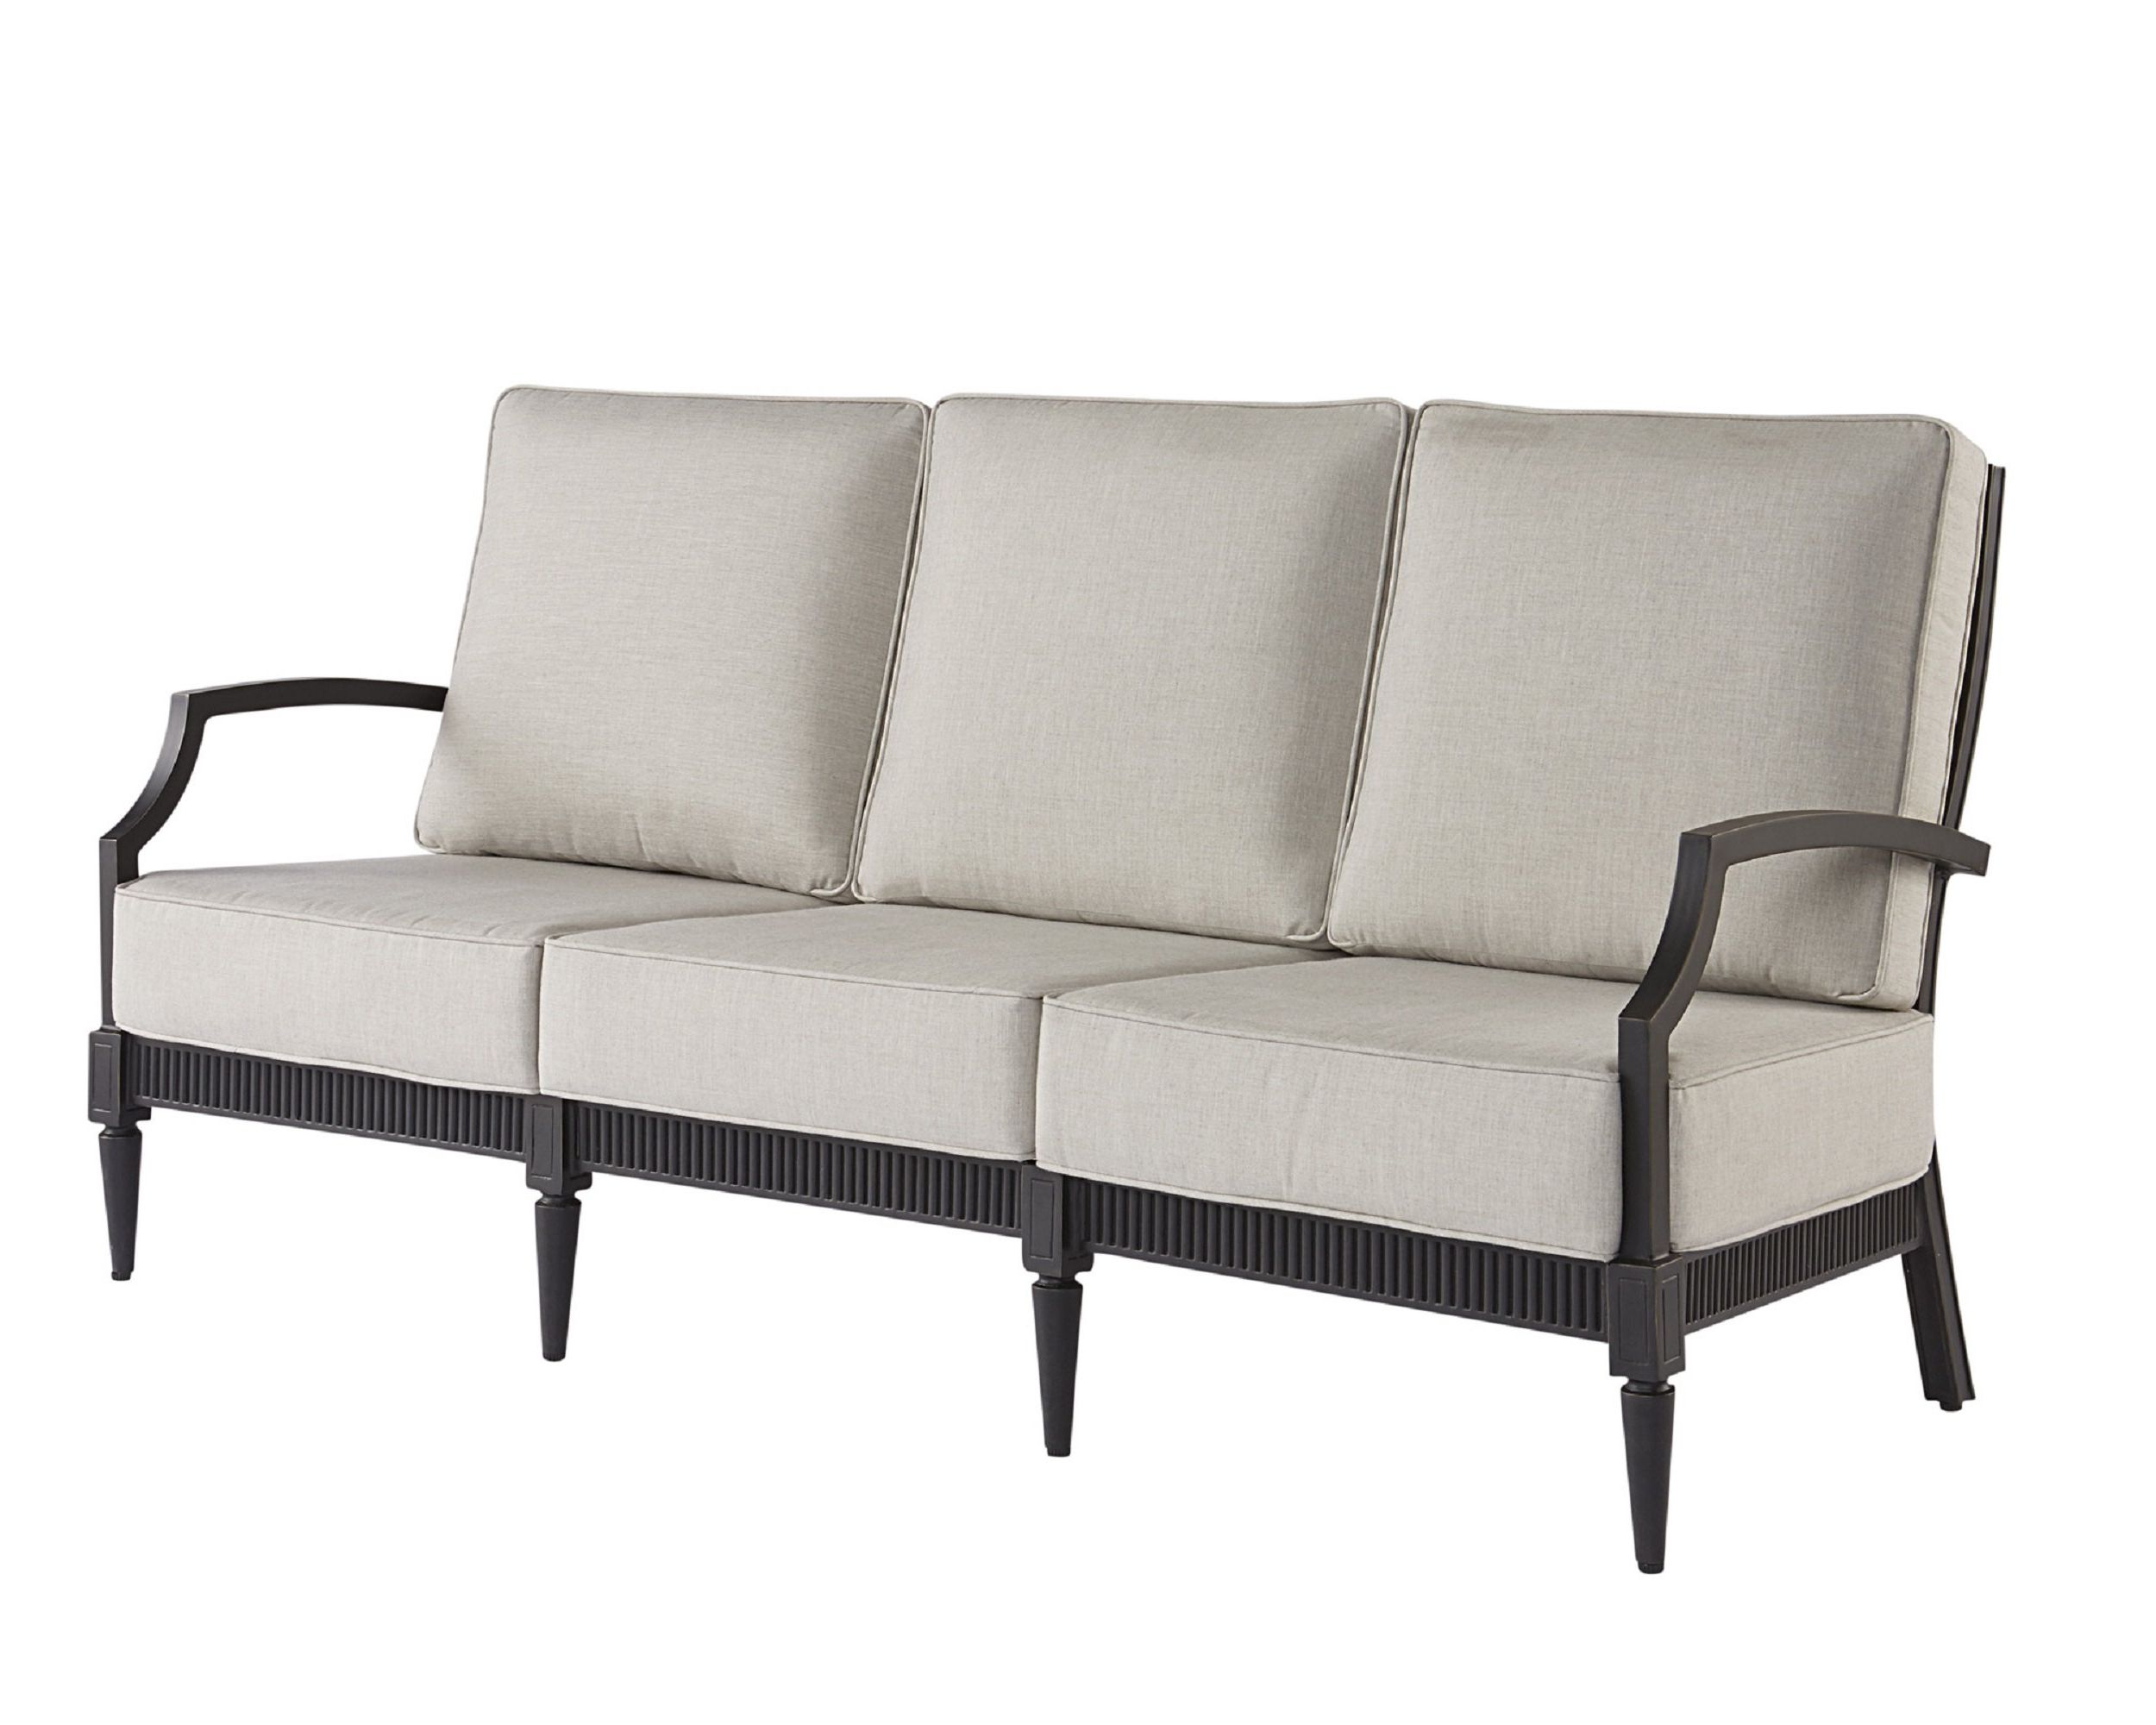 2020 Yoselin Patio Sofas With Cushions In Euston Patio Sofa With Cushions (View 16 of 20)